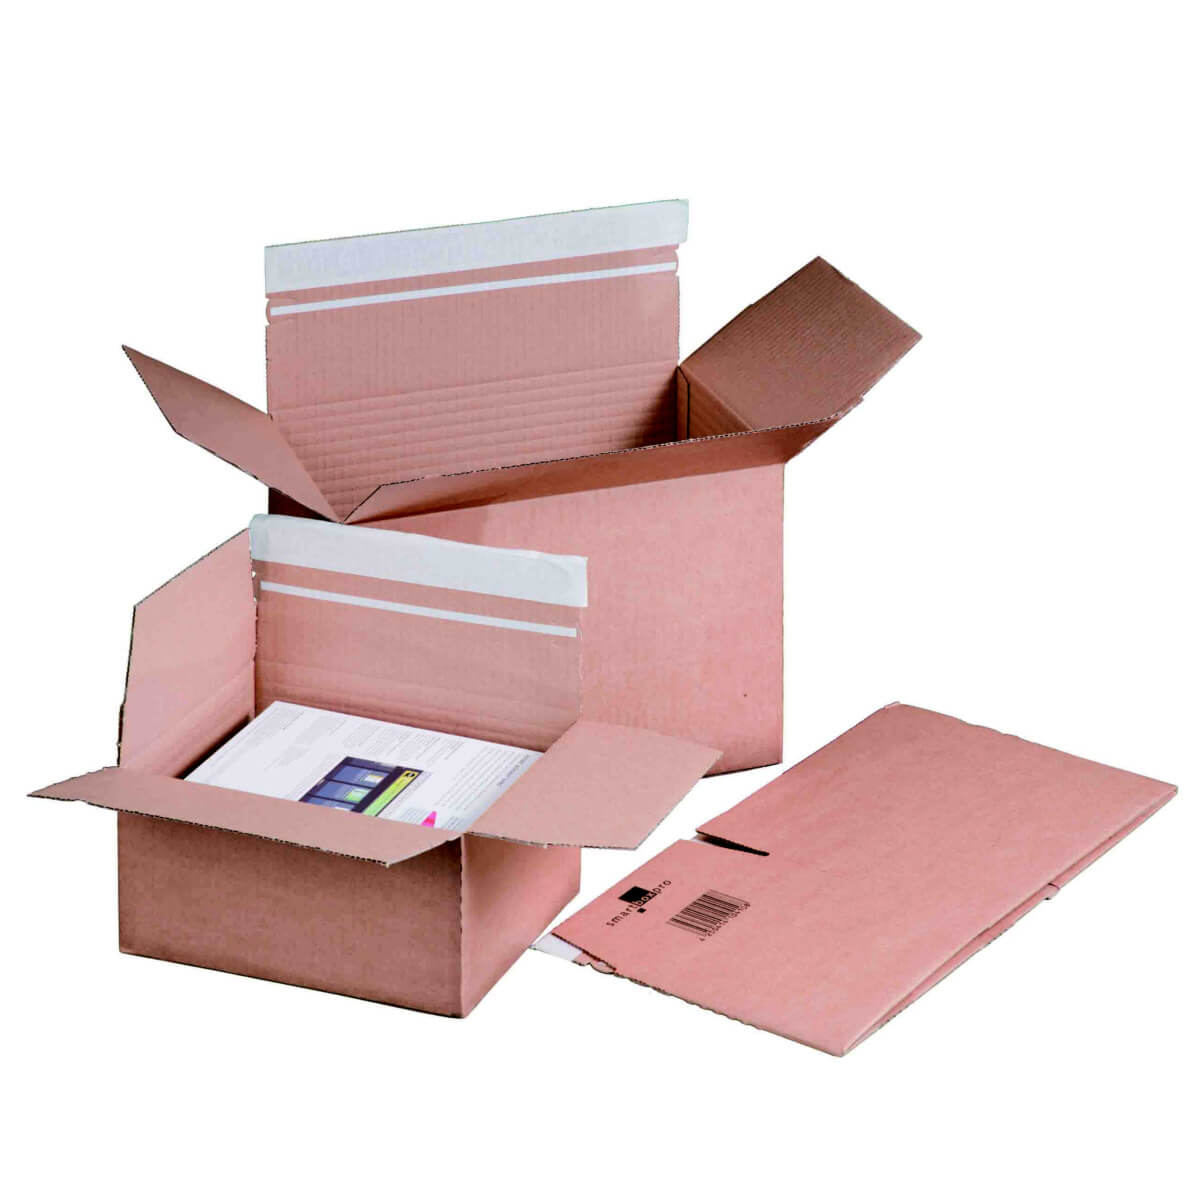 Hinged cardboard box 540x380x320 mm